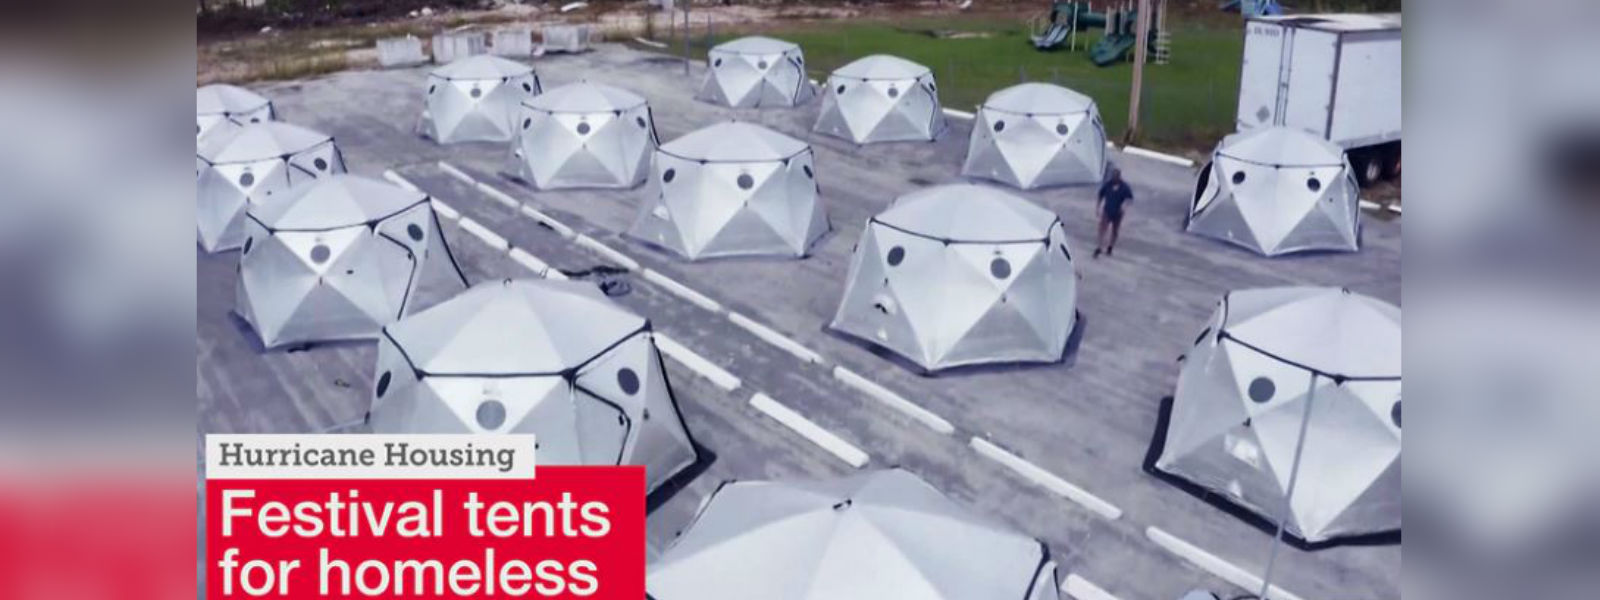 Music festival tents transformed into housing for Dorian homeless